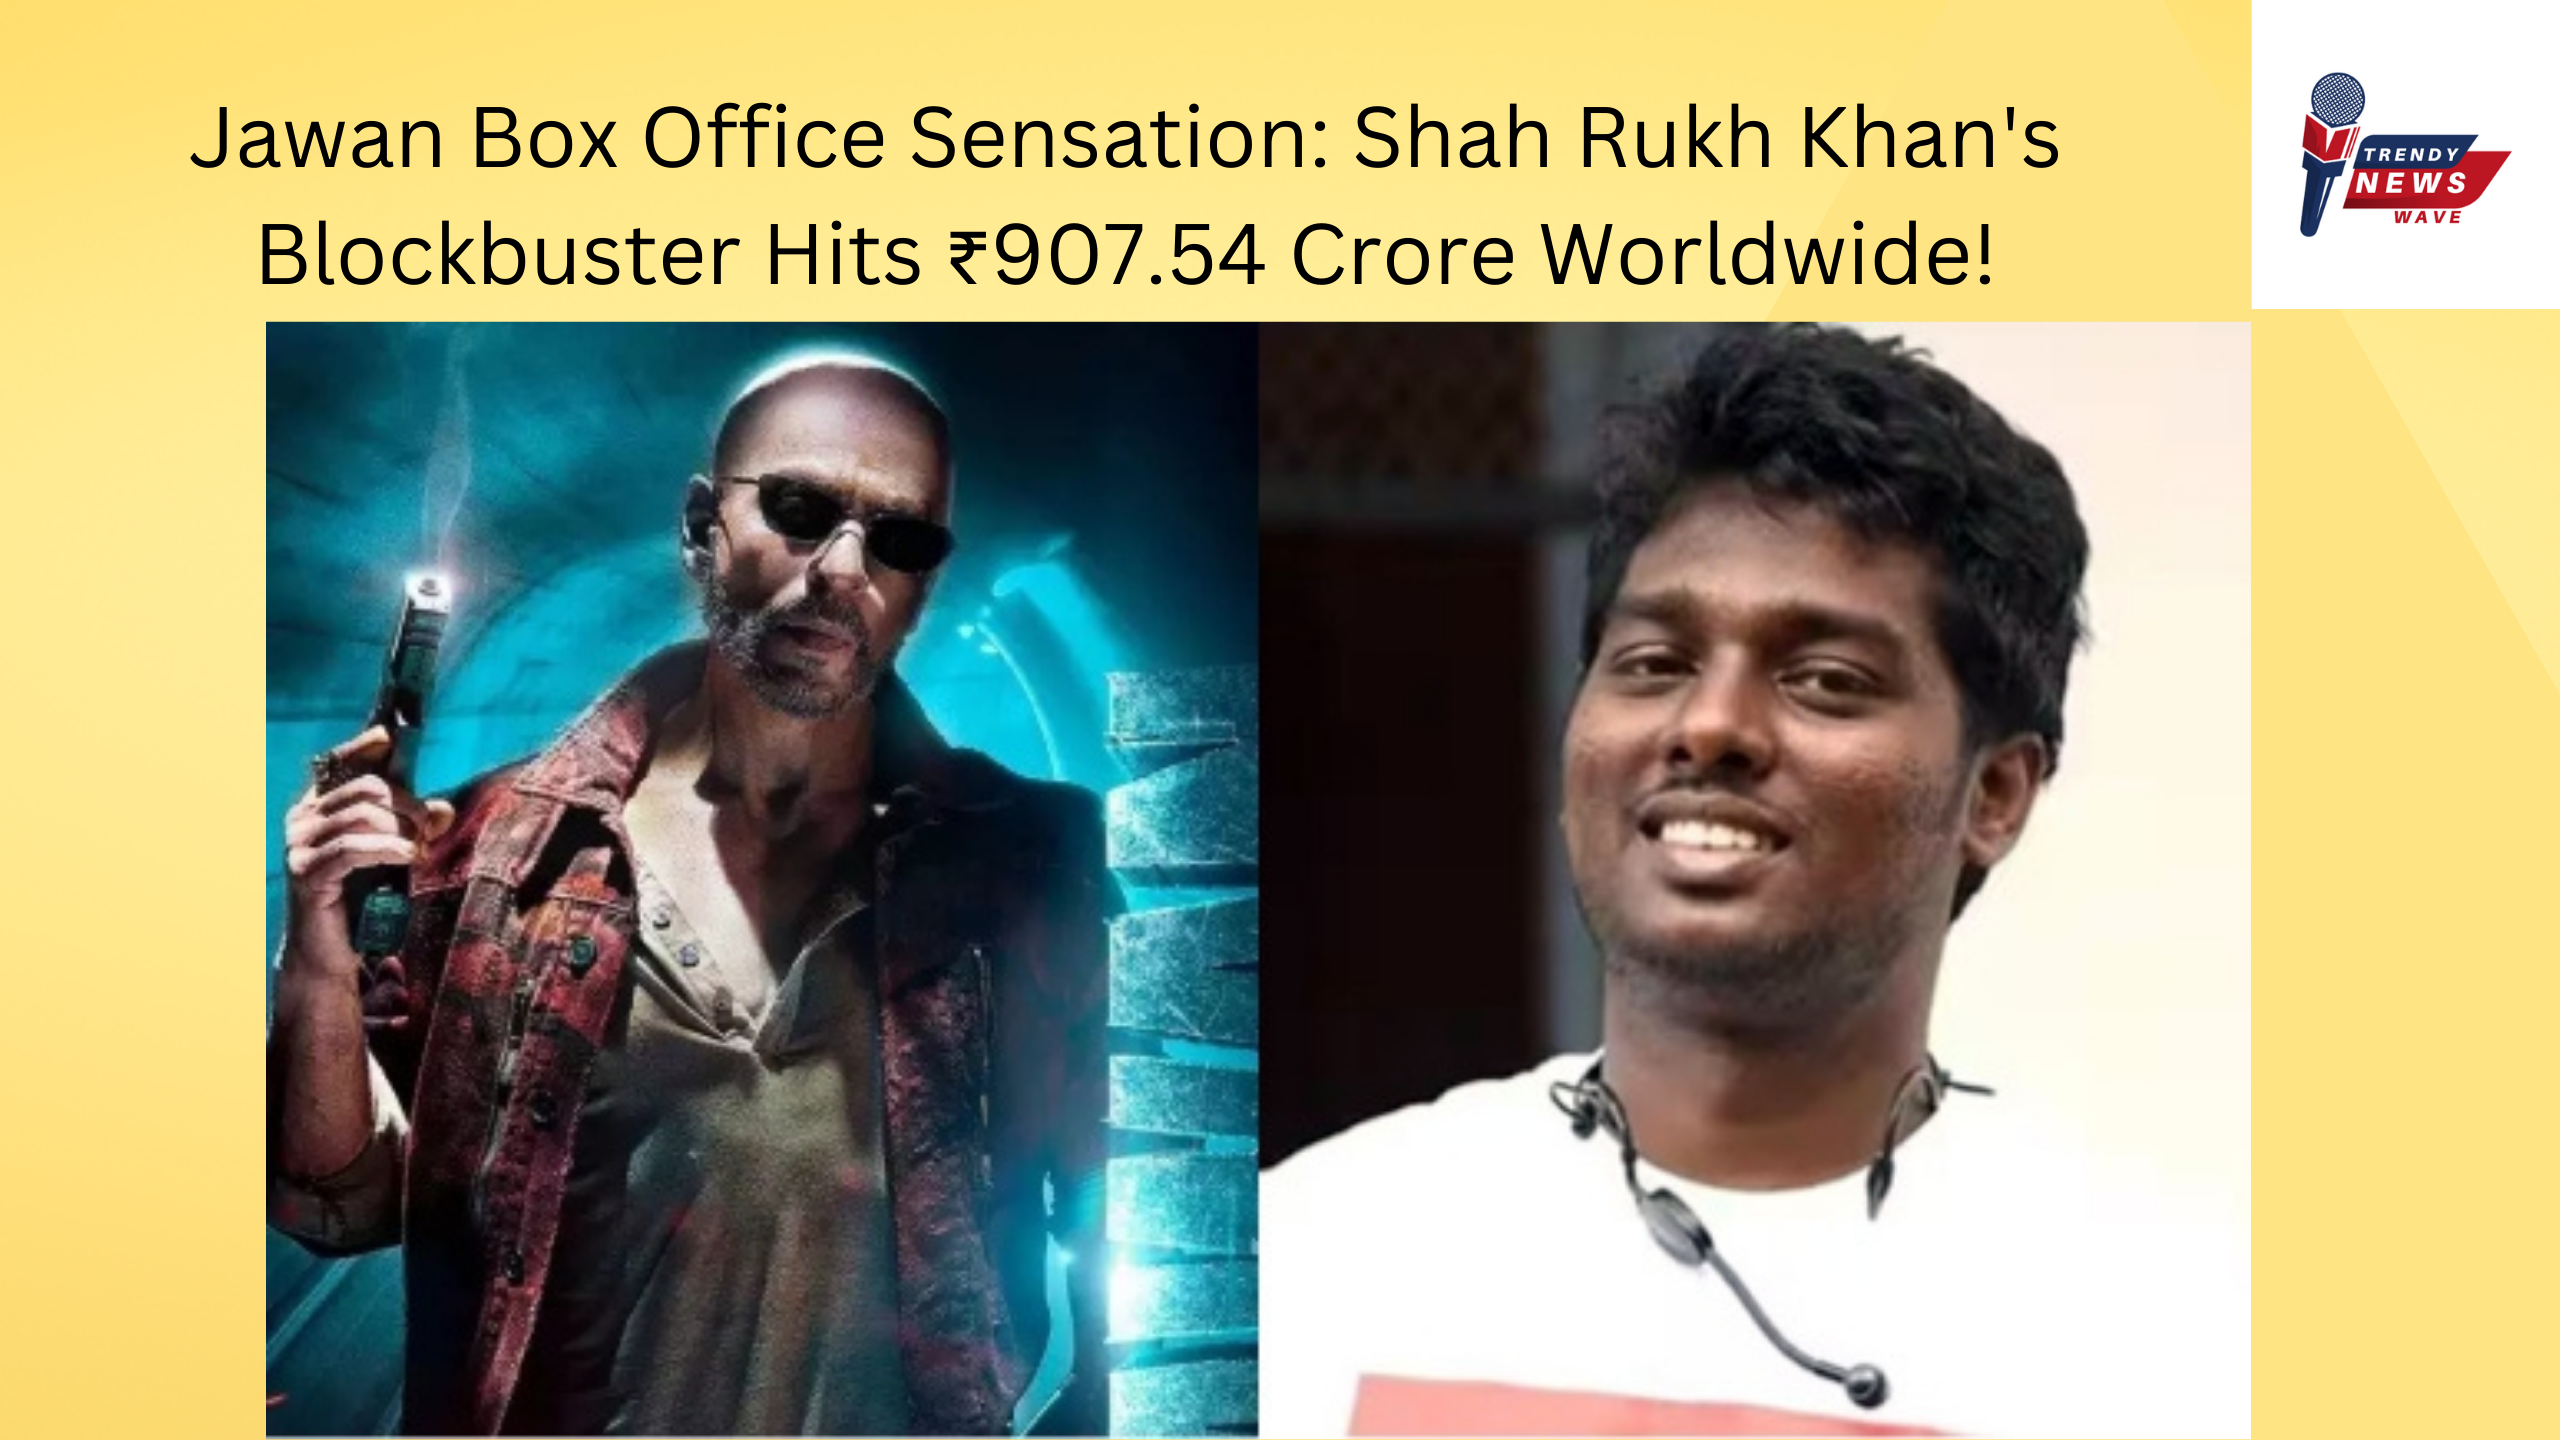 Jawan Box Office Sensation: Shah Rukh Khan's Blockbuster Hits ₹907.54 Crore Worldwide, Aiming for ₹1000 Crore Mark!